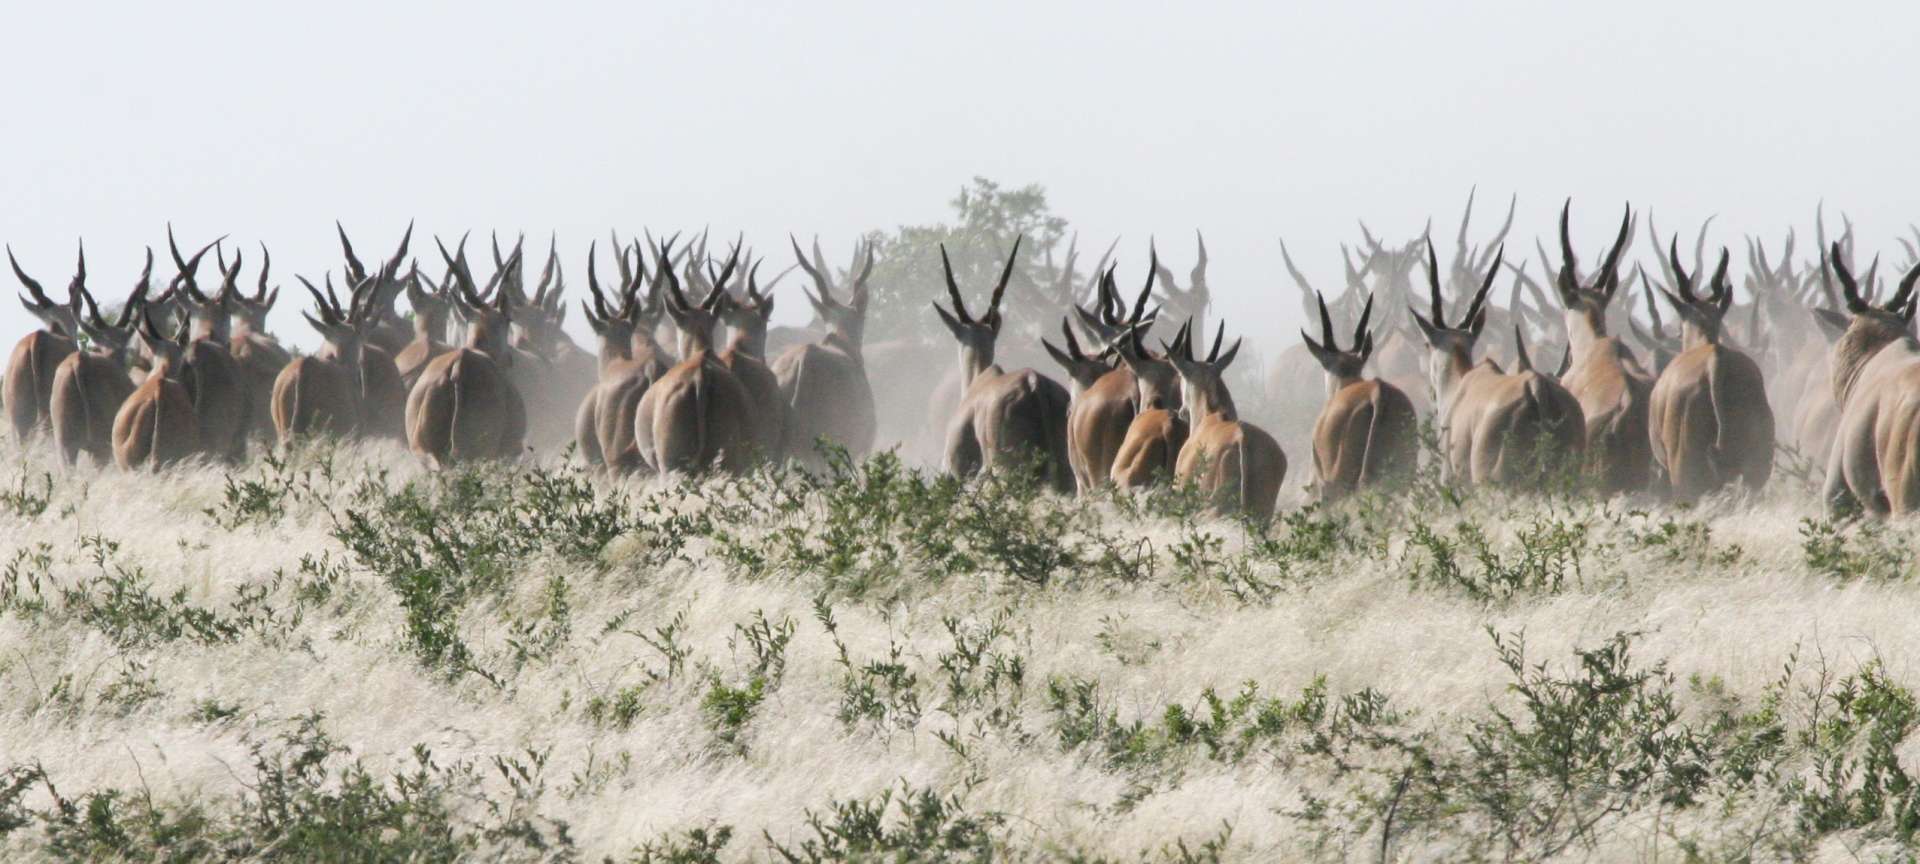 Wildlife is a major attraction in Botswana